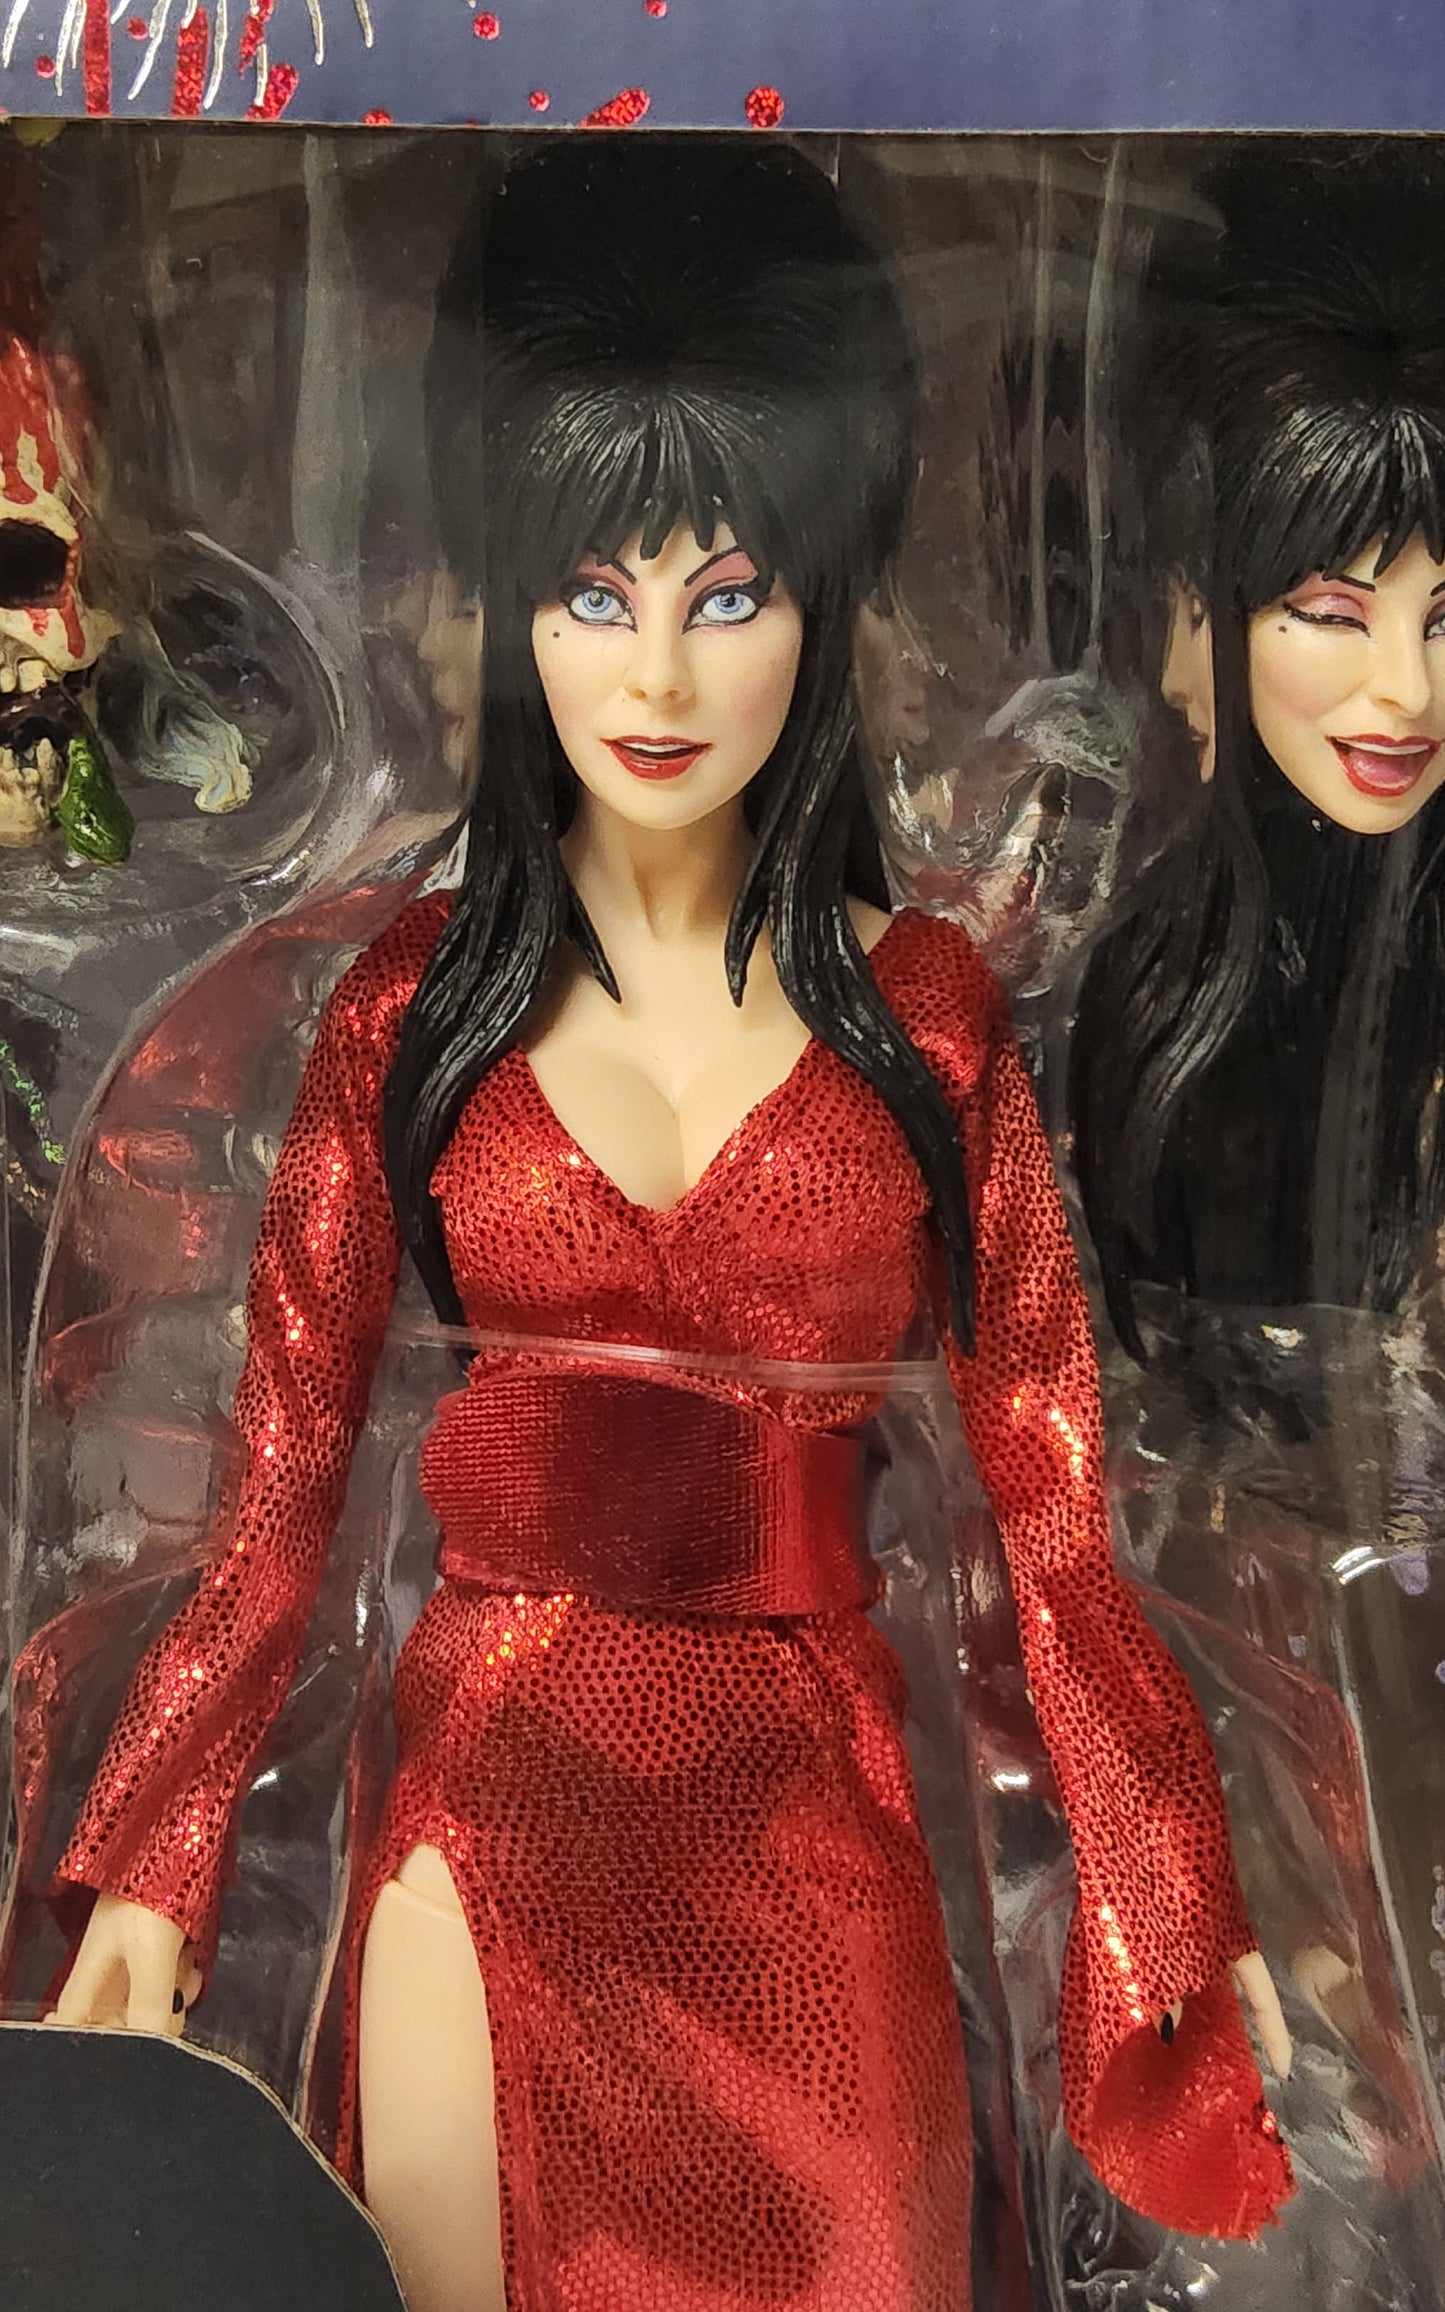 "NECA Elvira Mistress of the Dark 8" Action Figure - Red Fright & Boo"